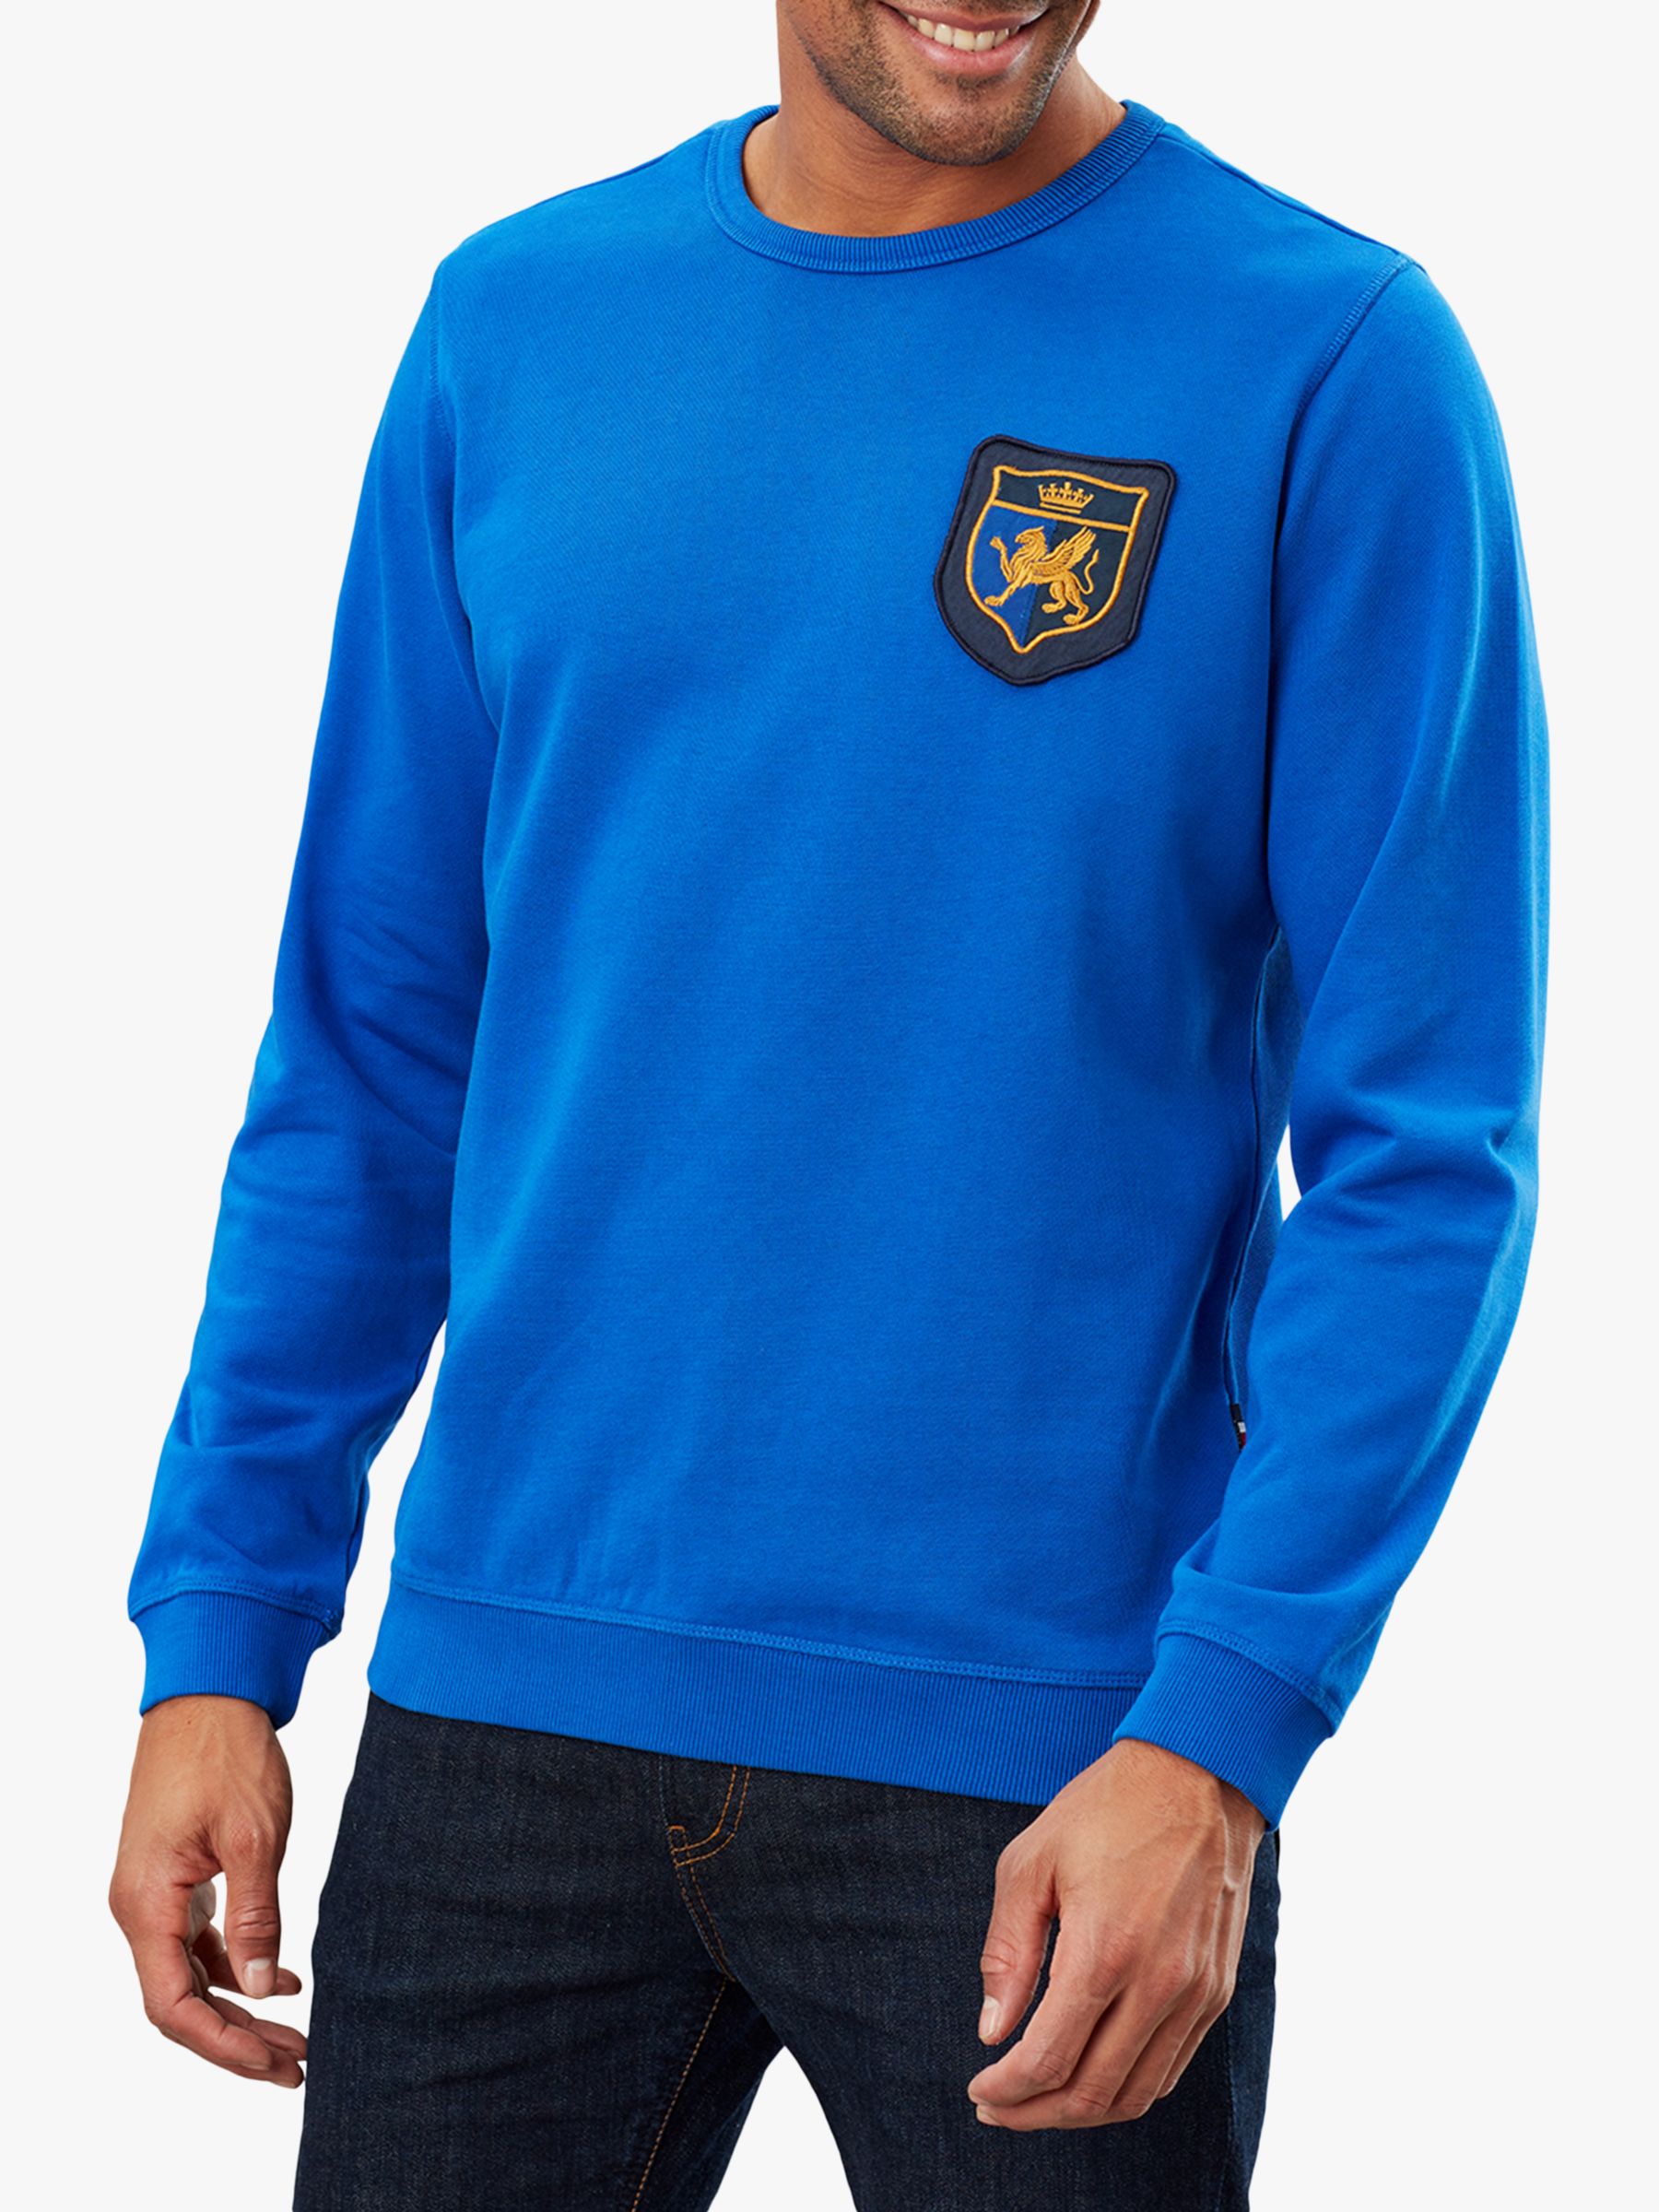 Joules Dartmouth Crest Badge Crew Sweatshirt, Blue